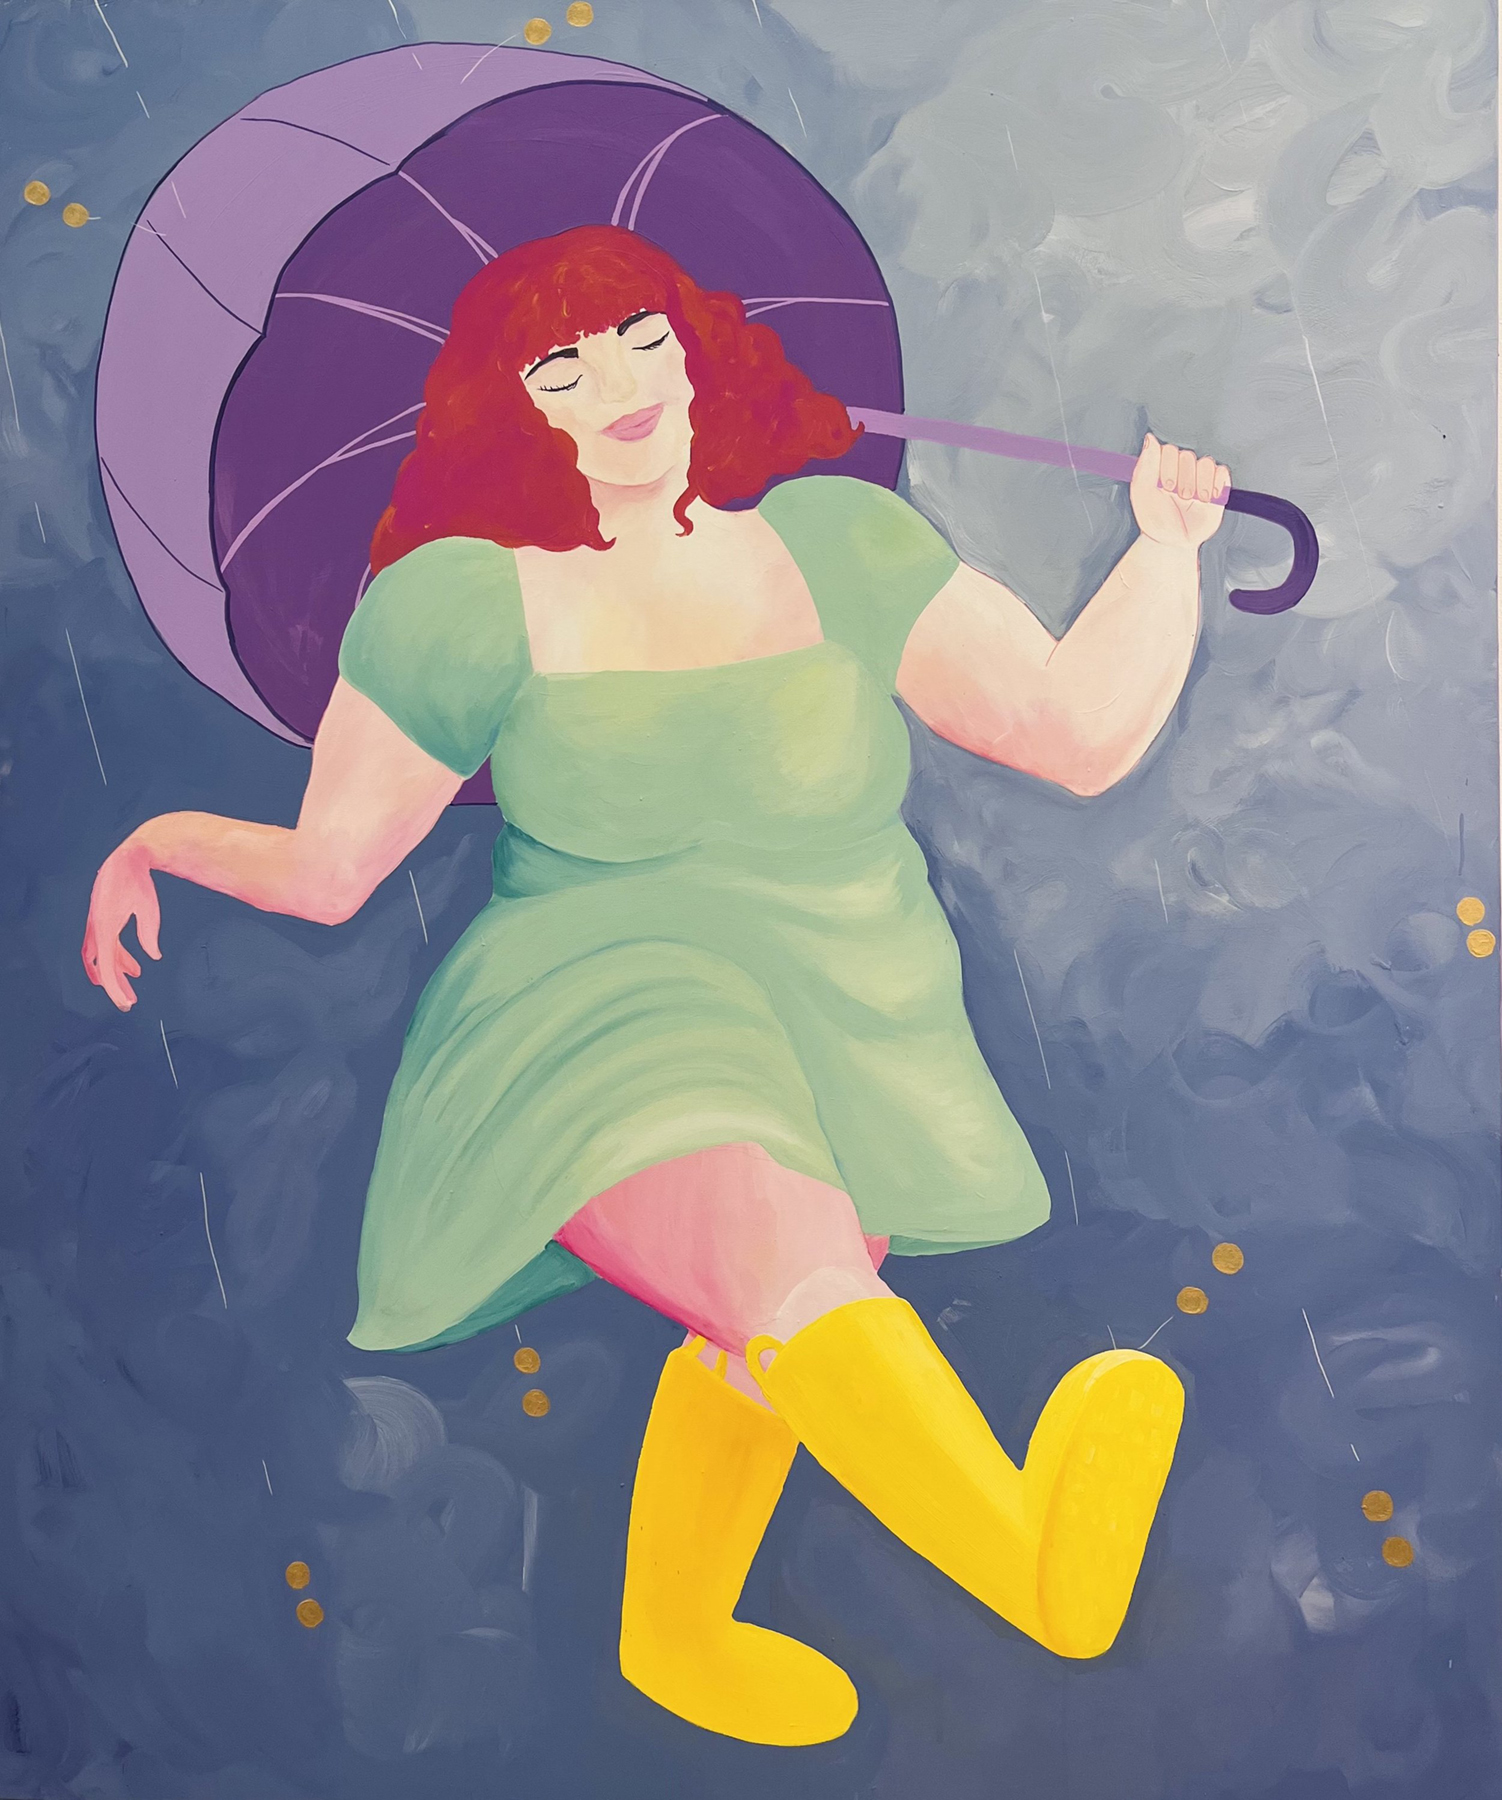 A smiling woman walks through the rain holding an umbrella, courtesy of the artist